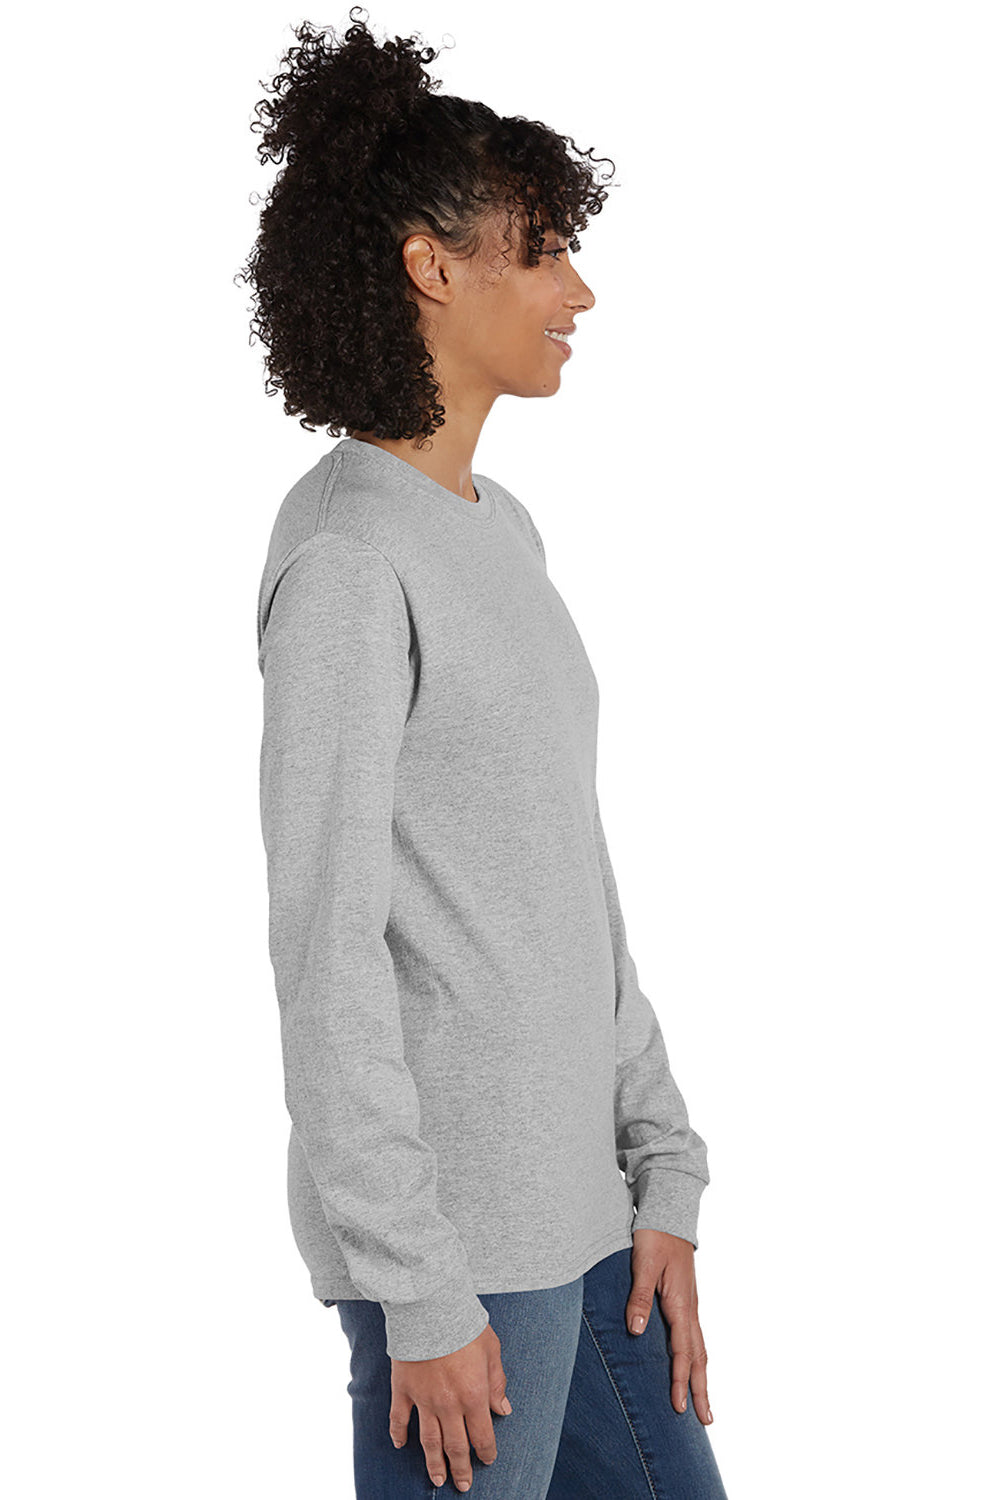 Hanes 5286 Mens ComfortSoft Long Sleeve Crewneck T-Shirt Oxford Grey SIde